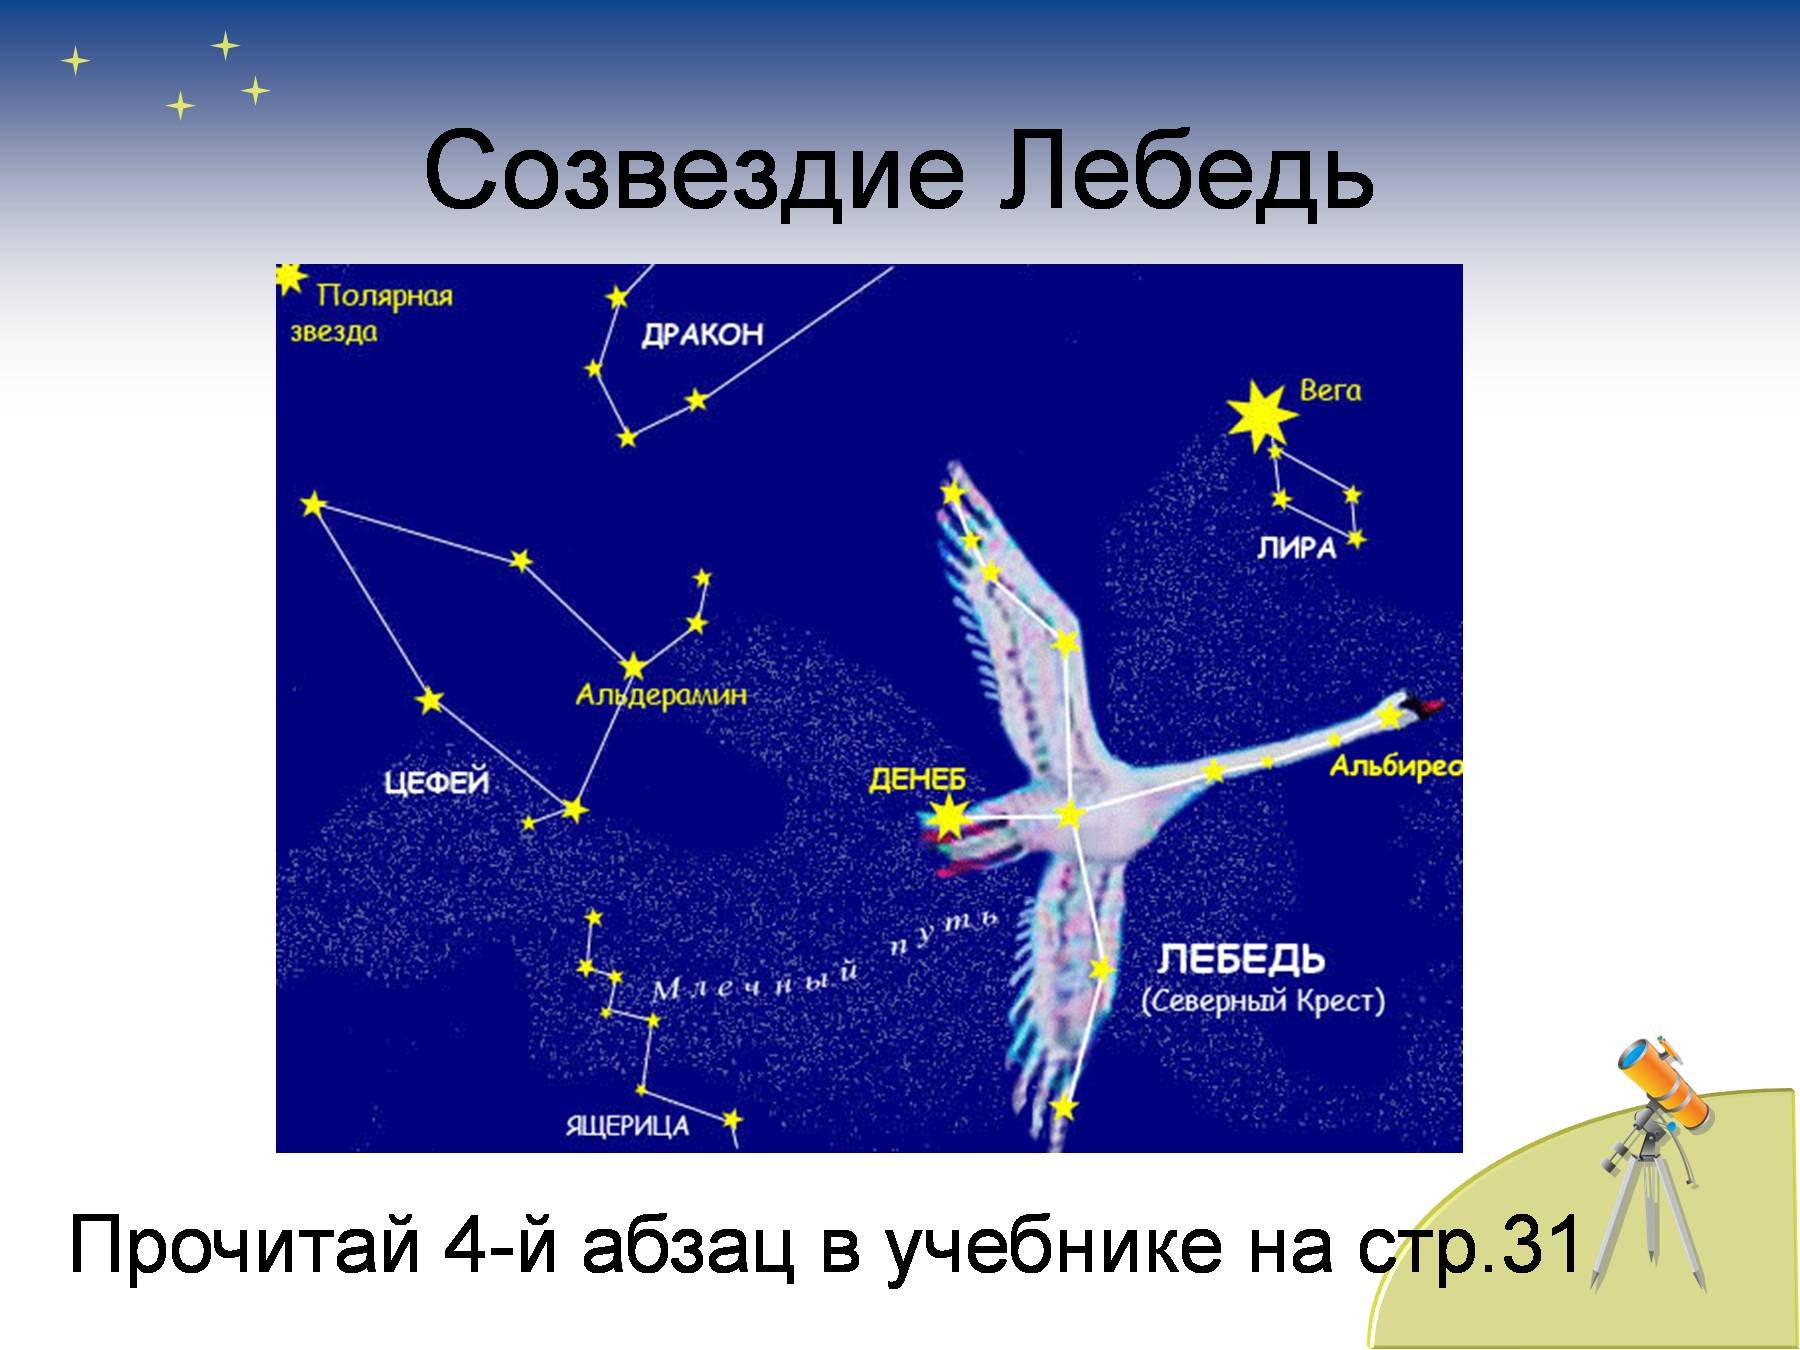 Презентация звездное небо весной 2 класс